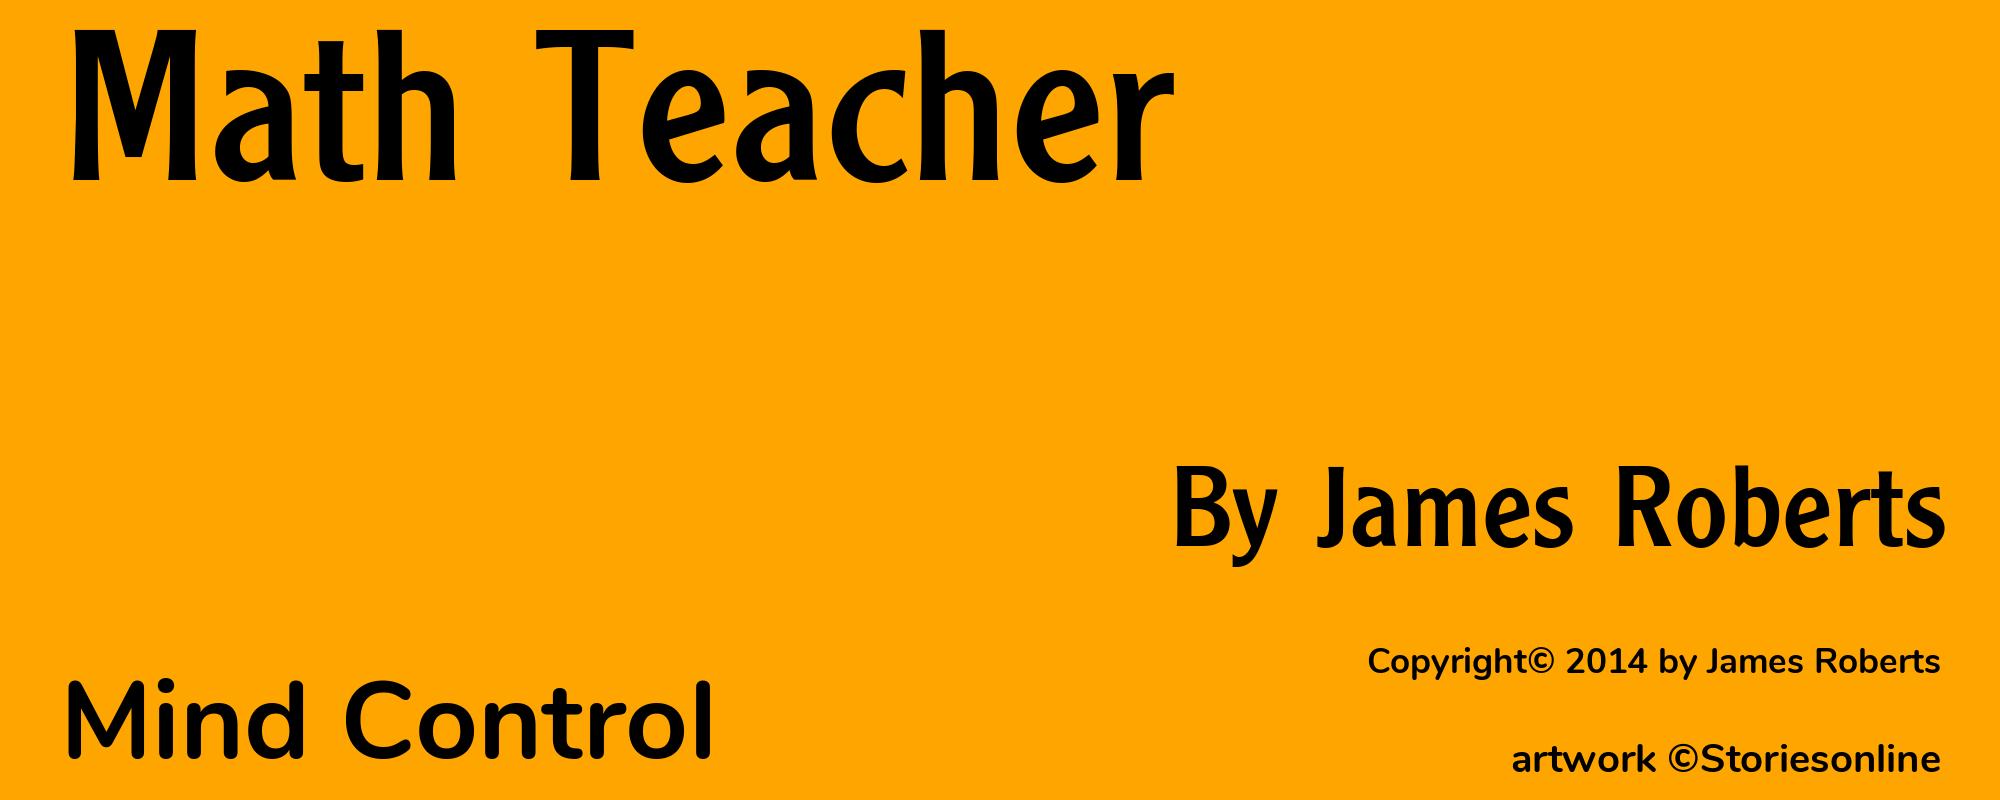 Math Teacher - Cover